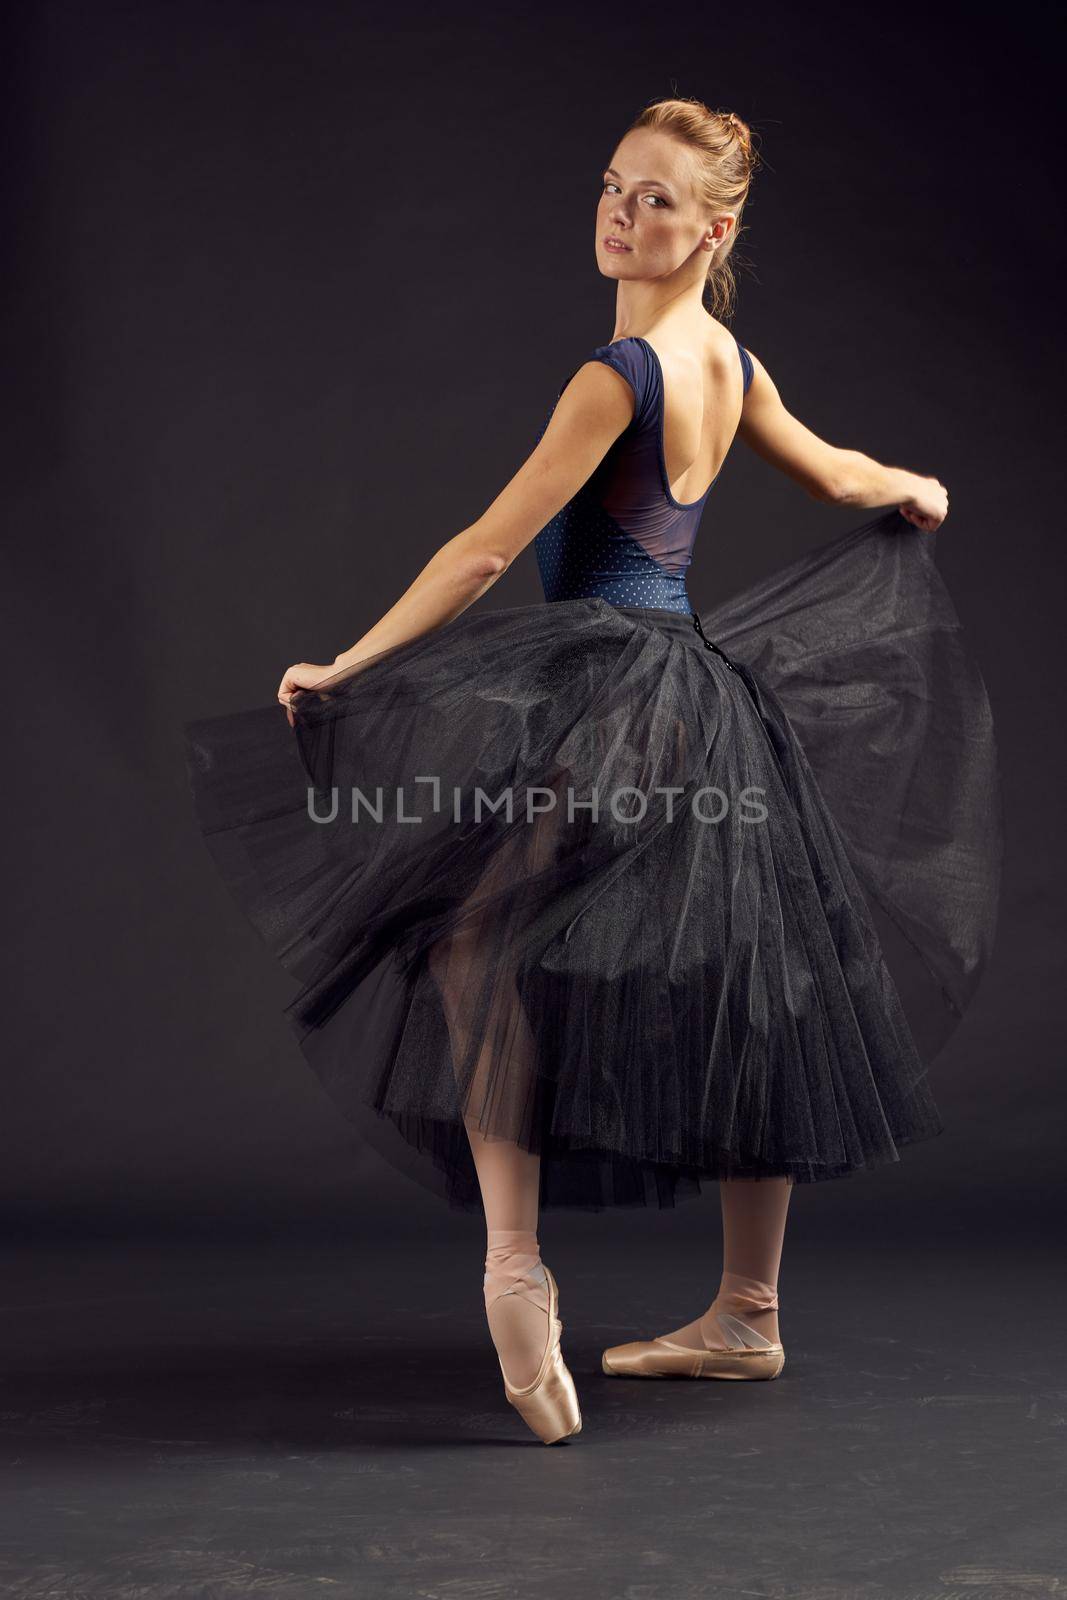 woman dancer elegant style art balance artist dark background. High quality photo